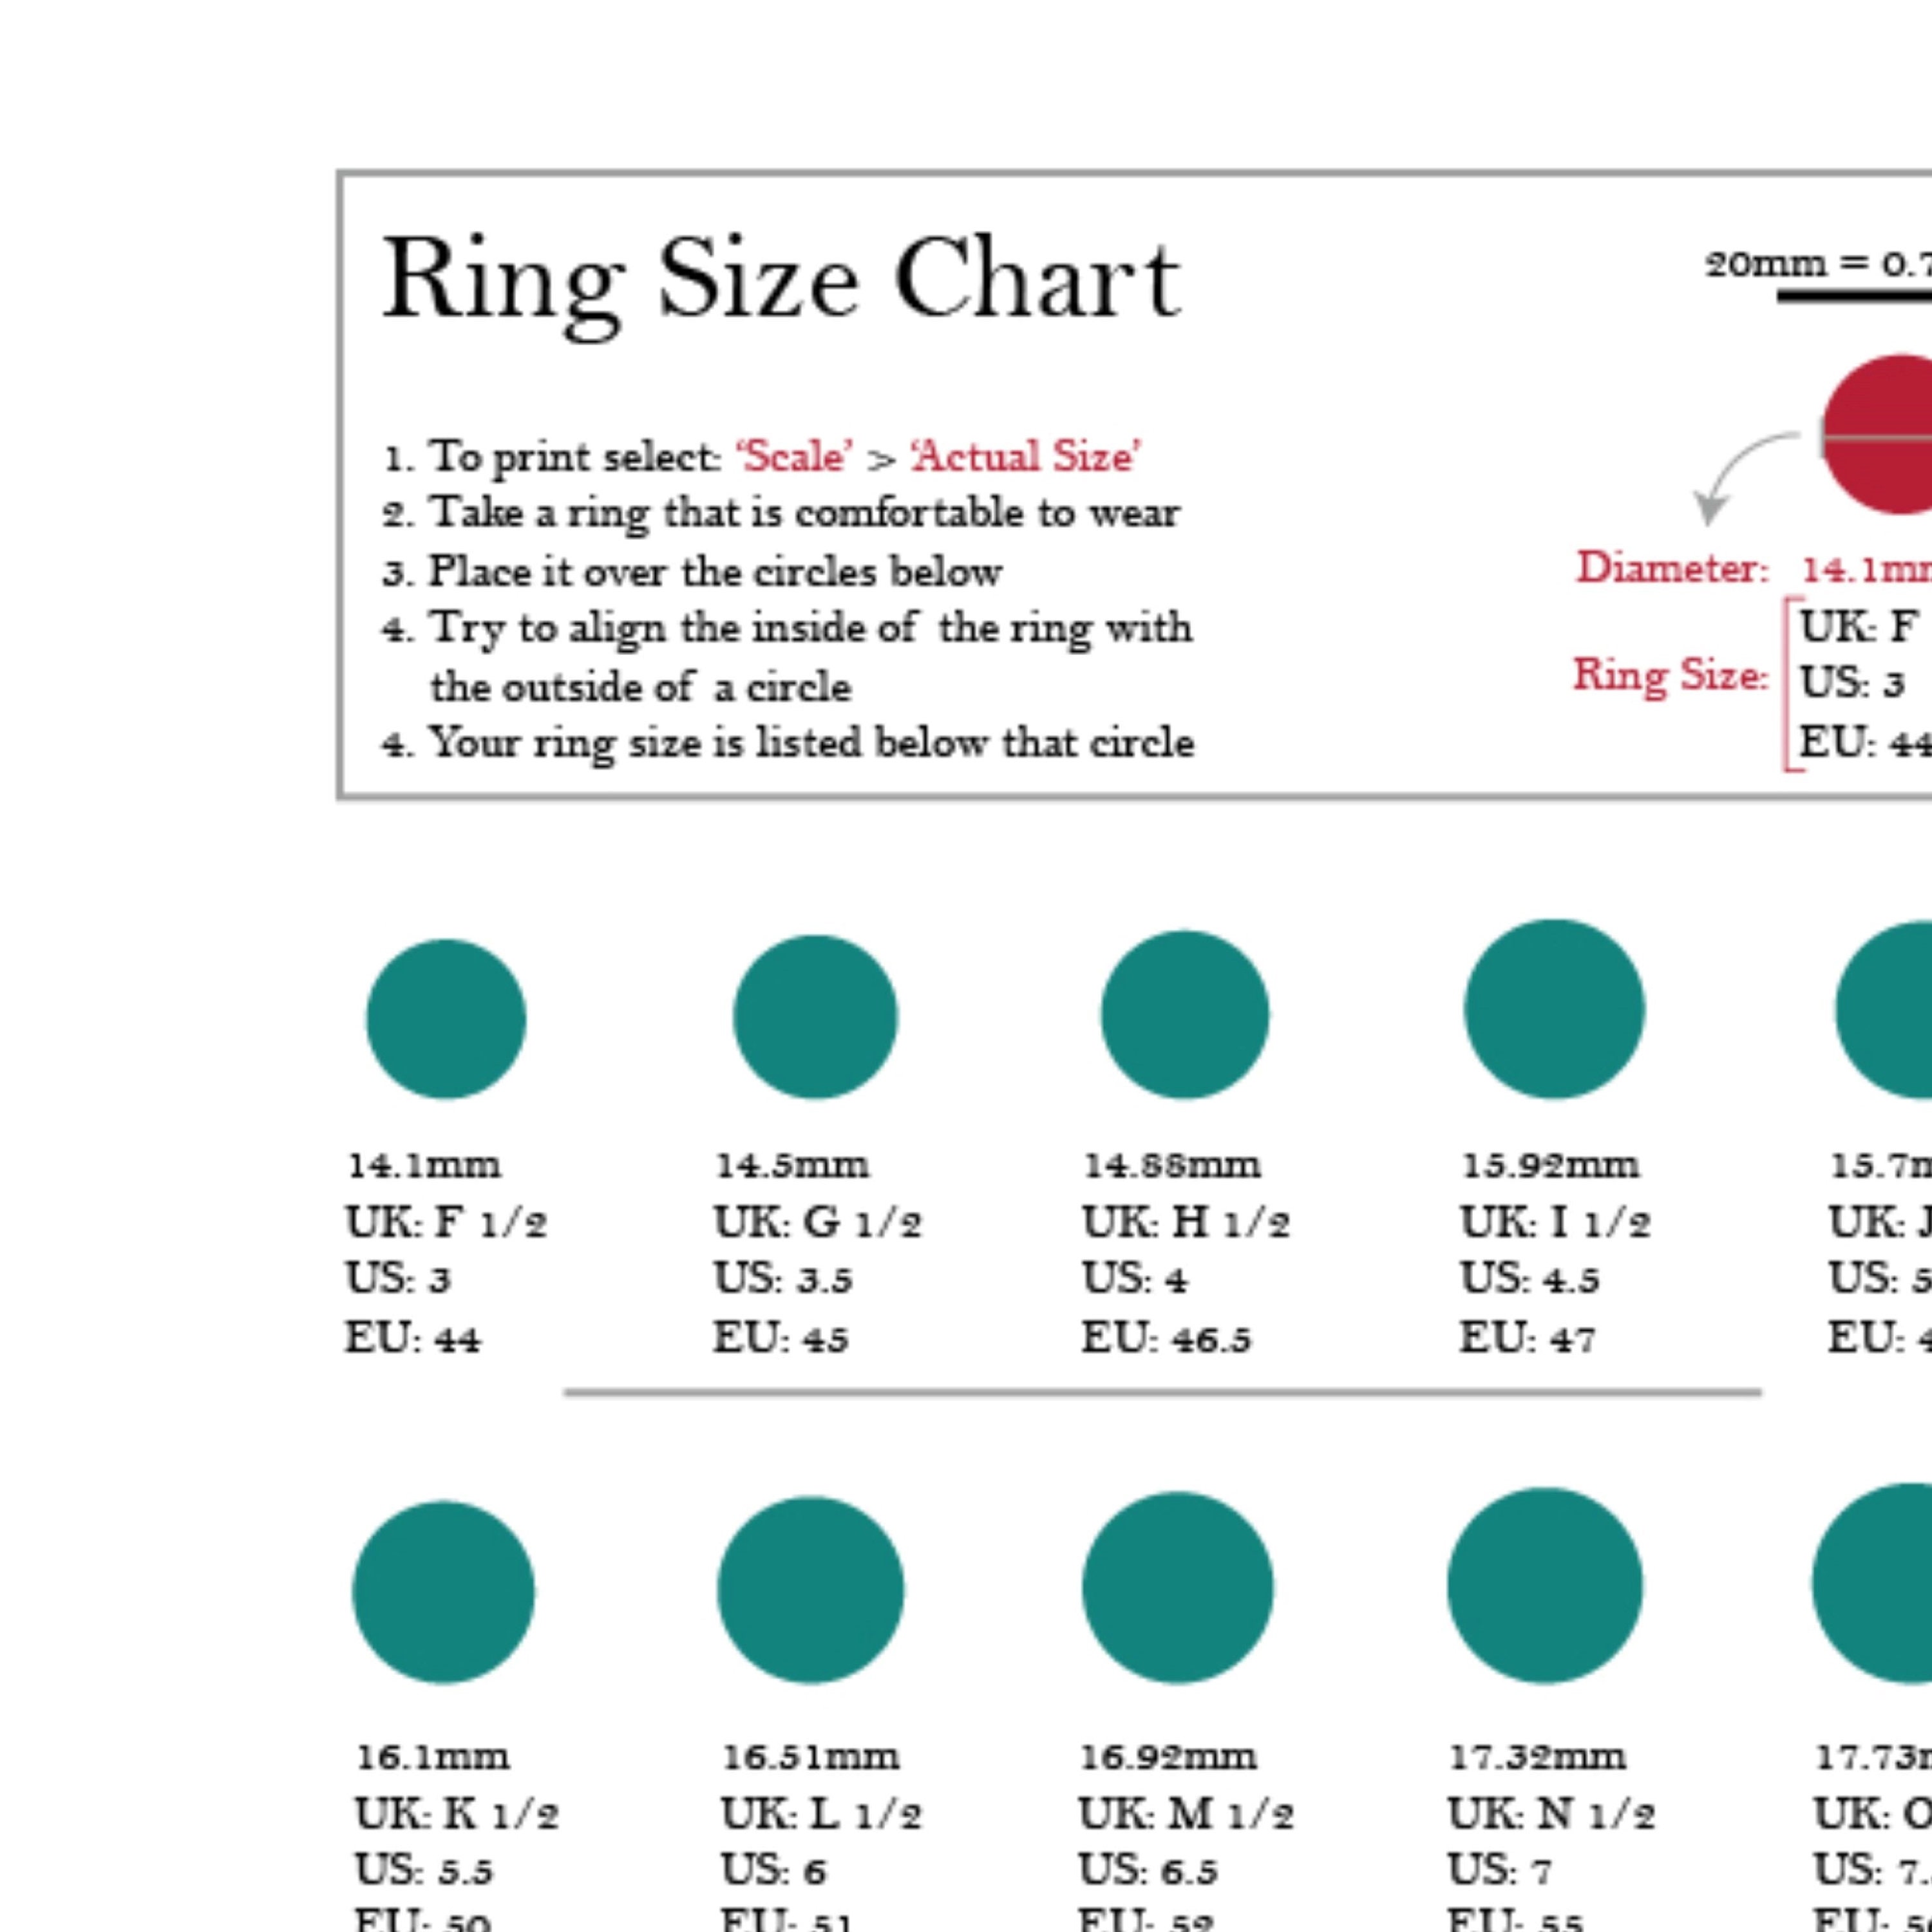 Men's To Women's Shoes Size Conversion Chart